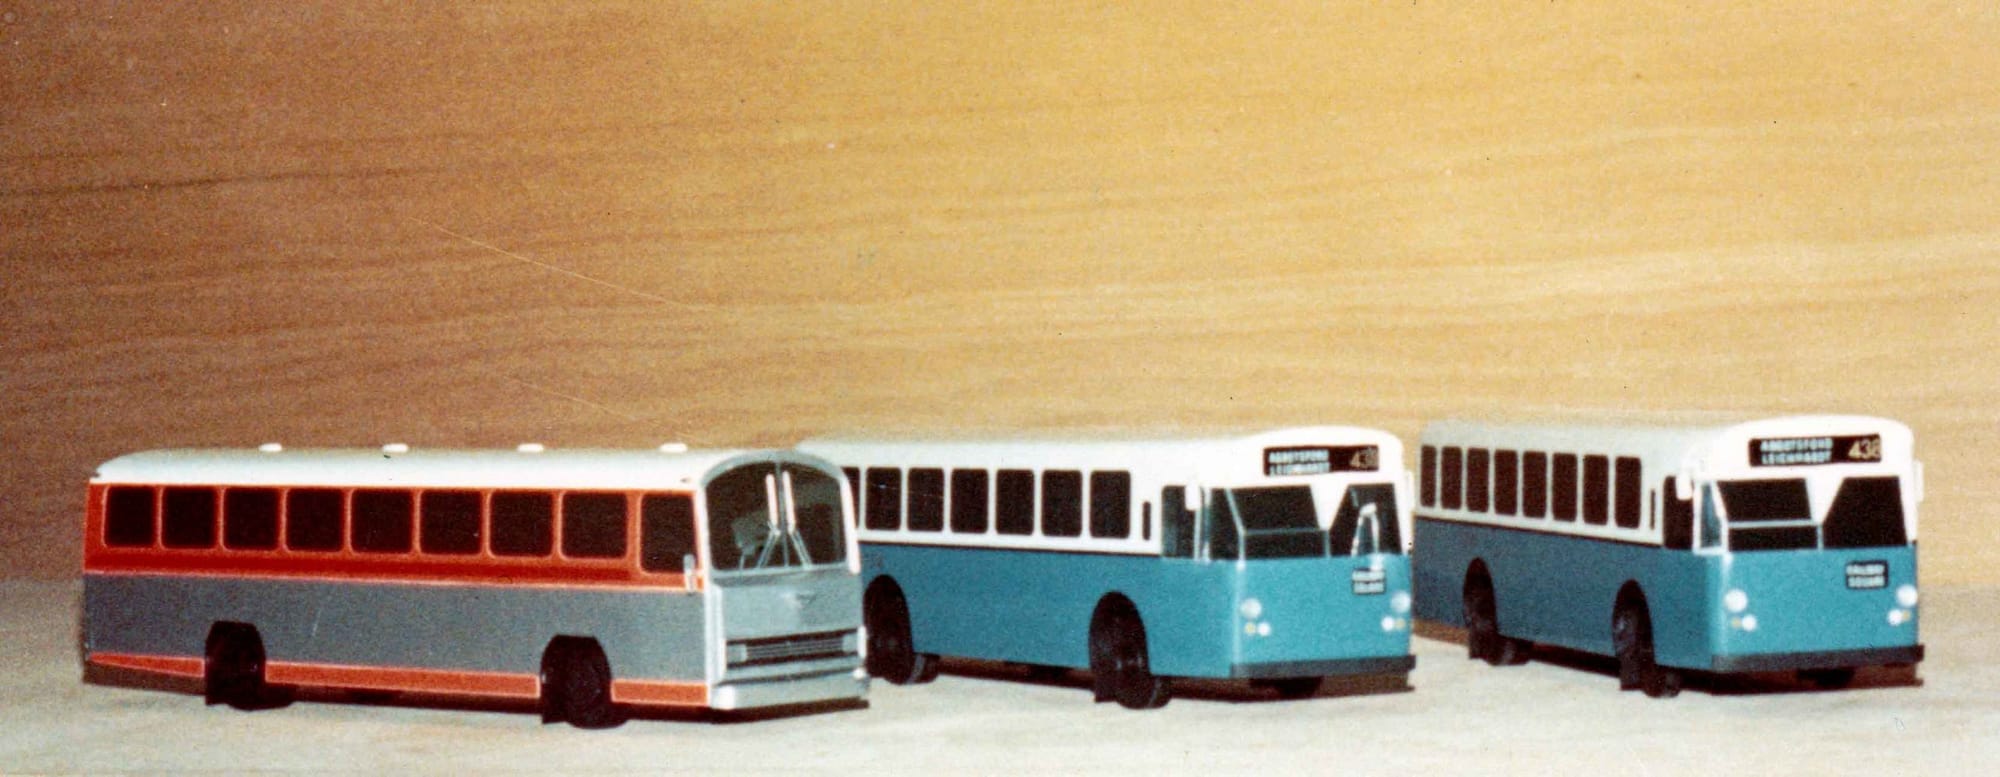 Three single-decker buses